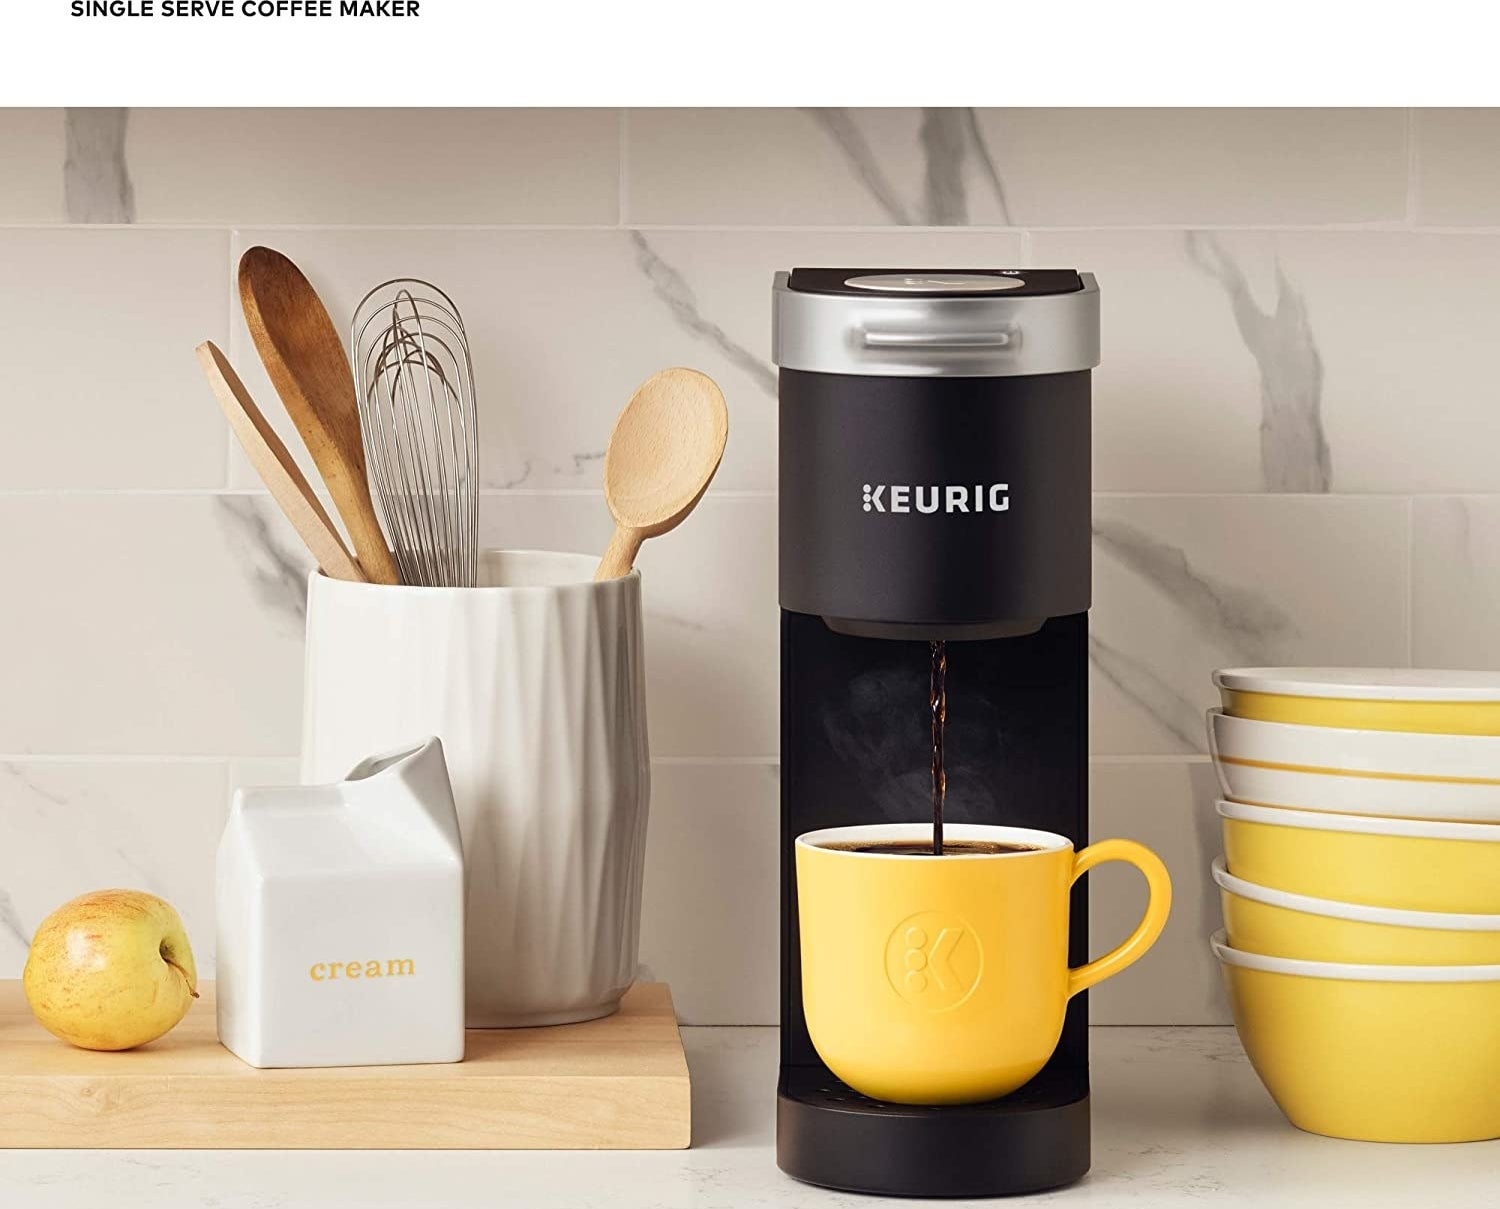 The slim machine dispensing coffee into a mug